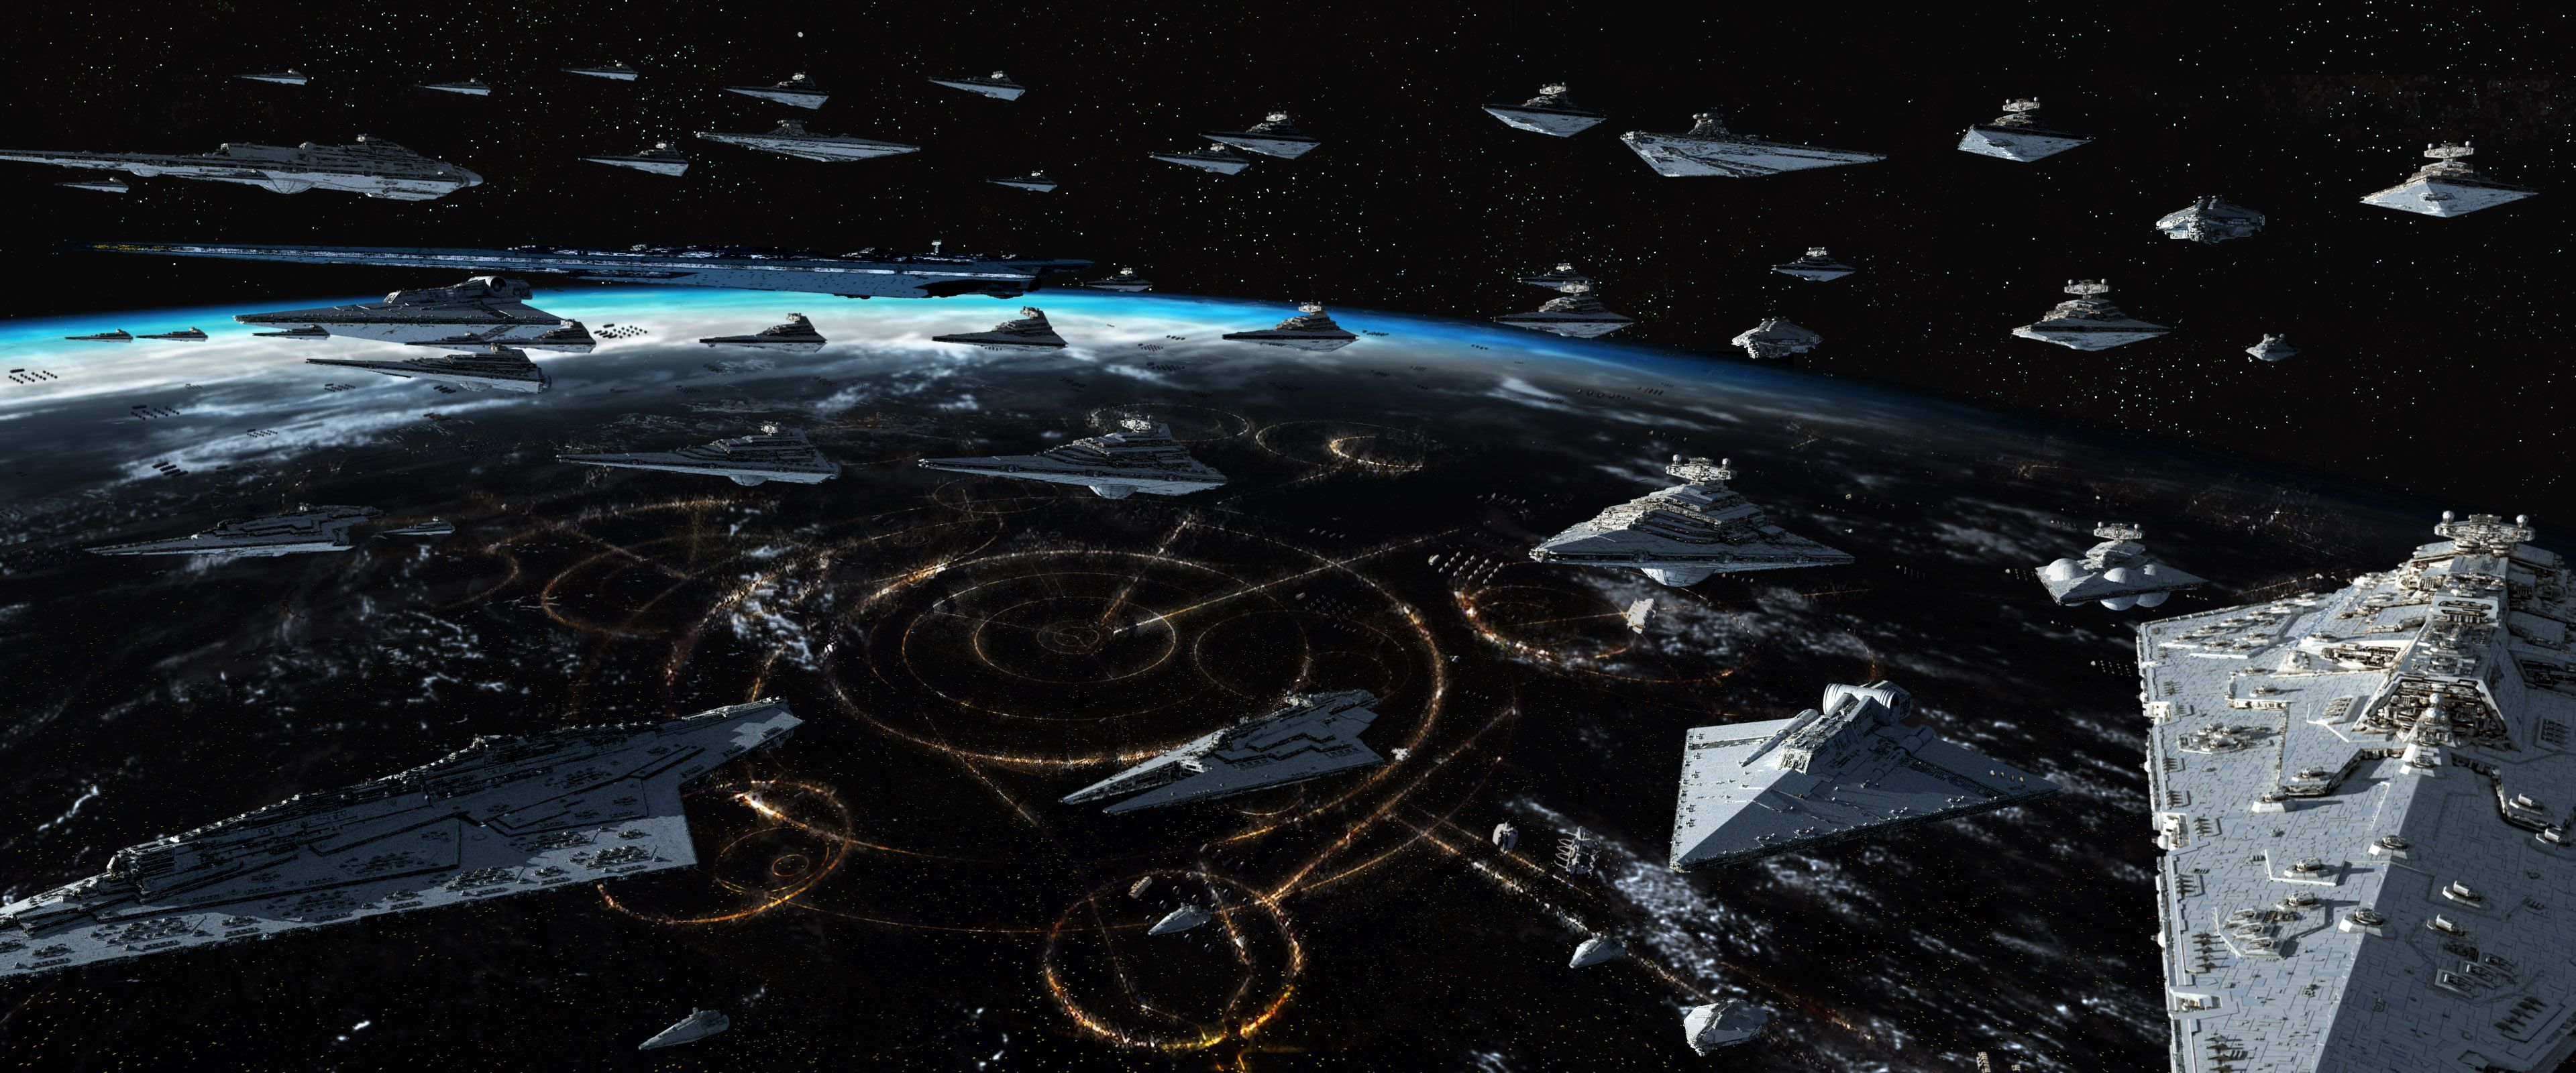 Fleet Review. Star wars ships design, Star wars picture, Star wars sith empire